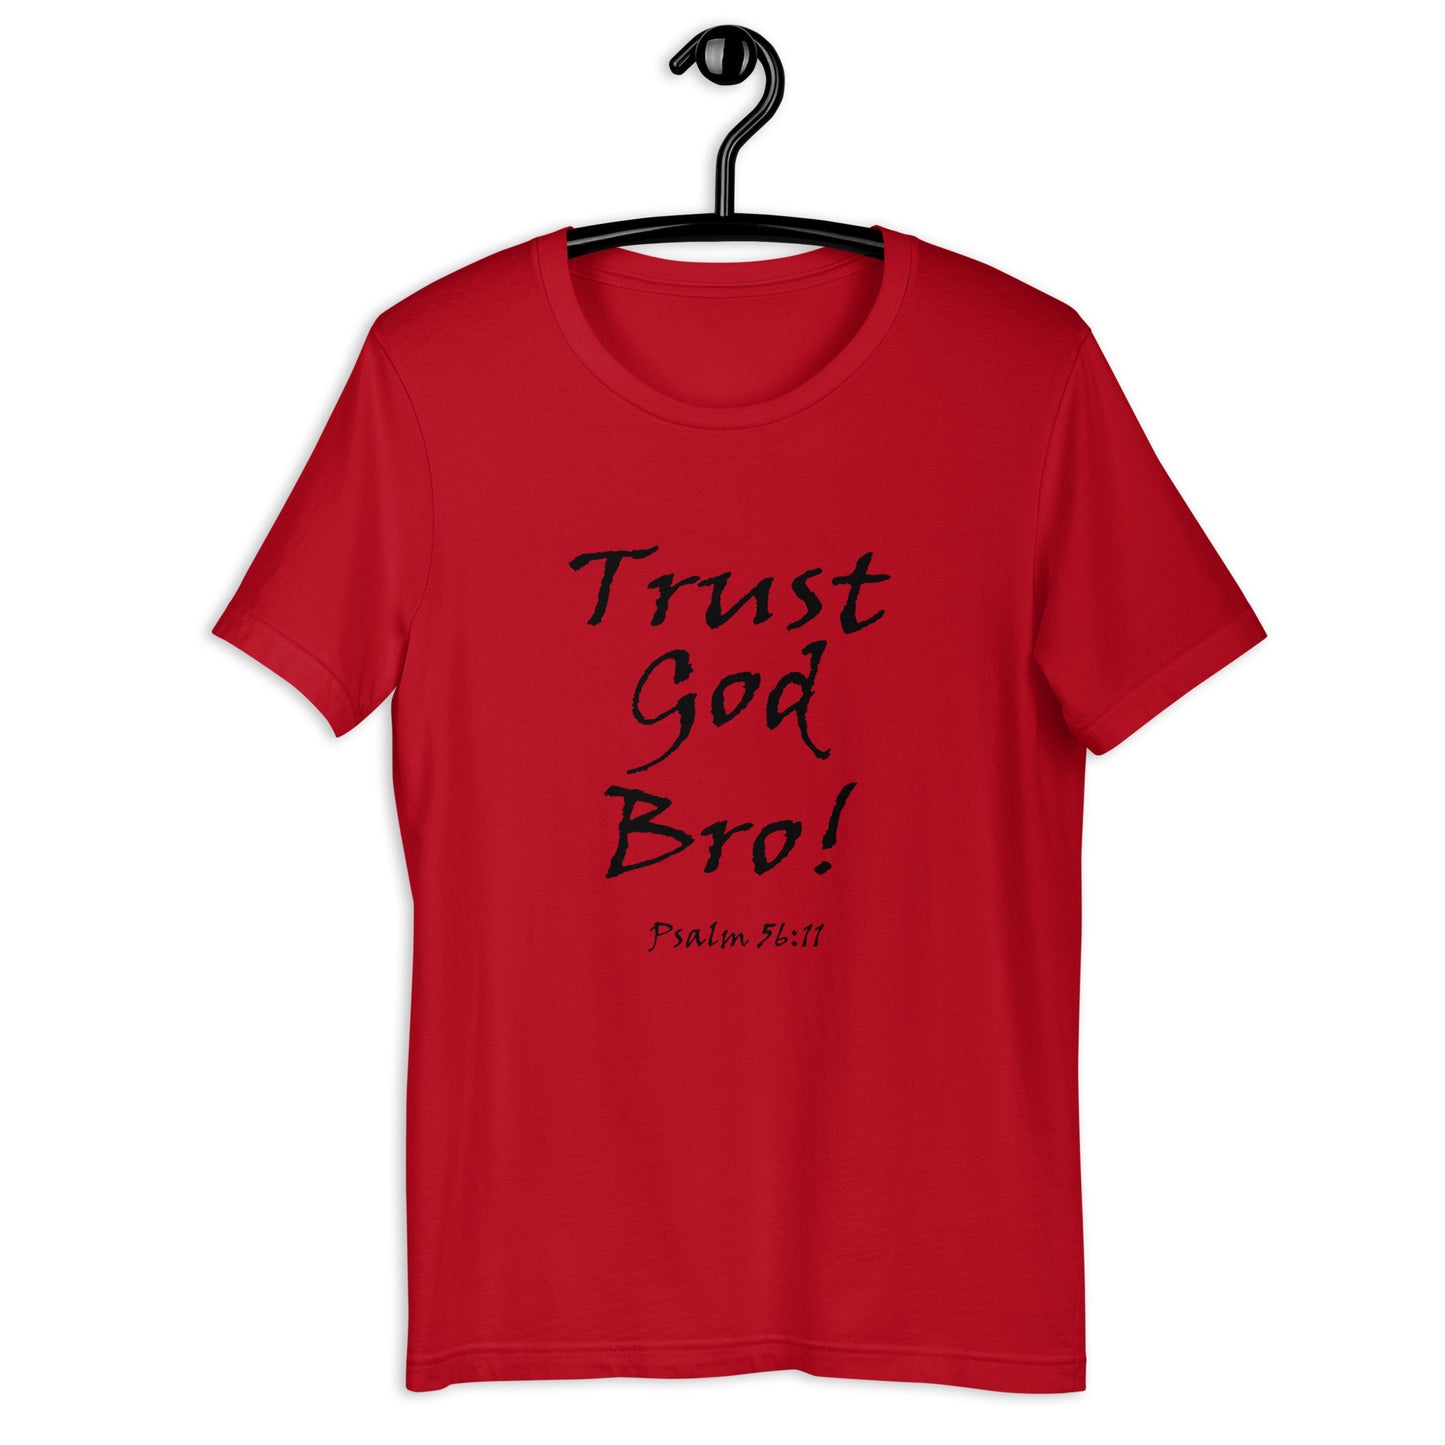 Trust God Bro! Unisex t-shirt - Solid Rock Designs | Christian Apparel